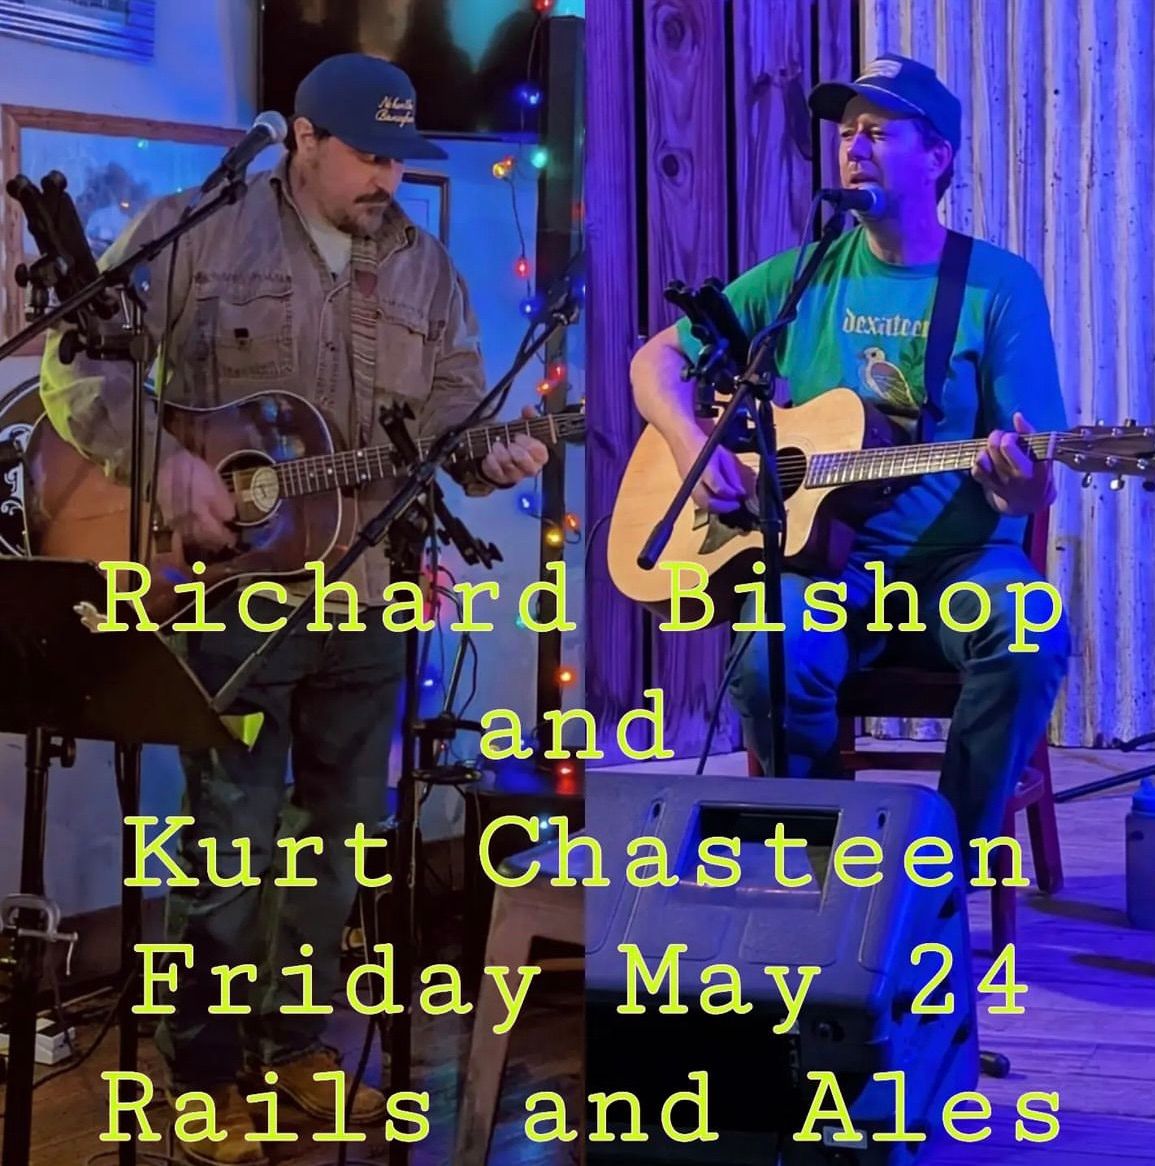 Live Music with Kurt Chasteen & Richard Bishop + D'Squared 